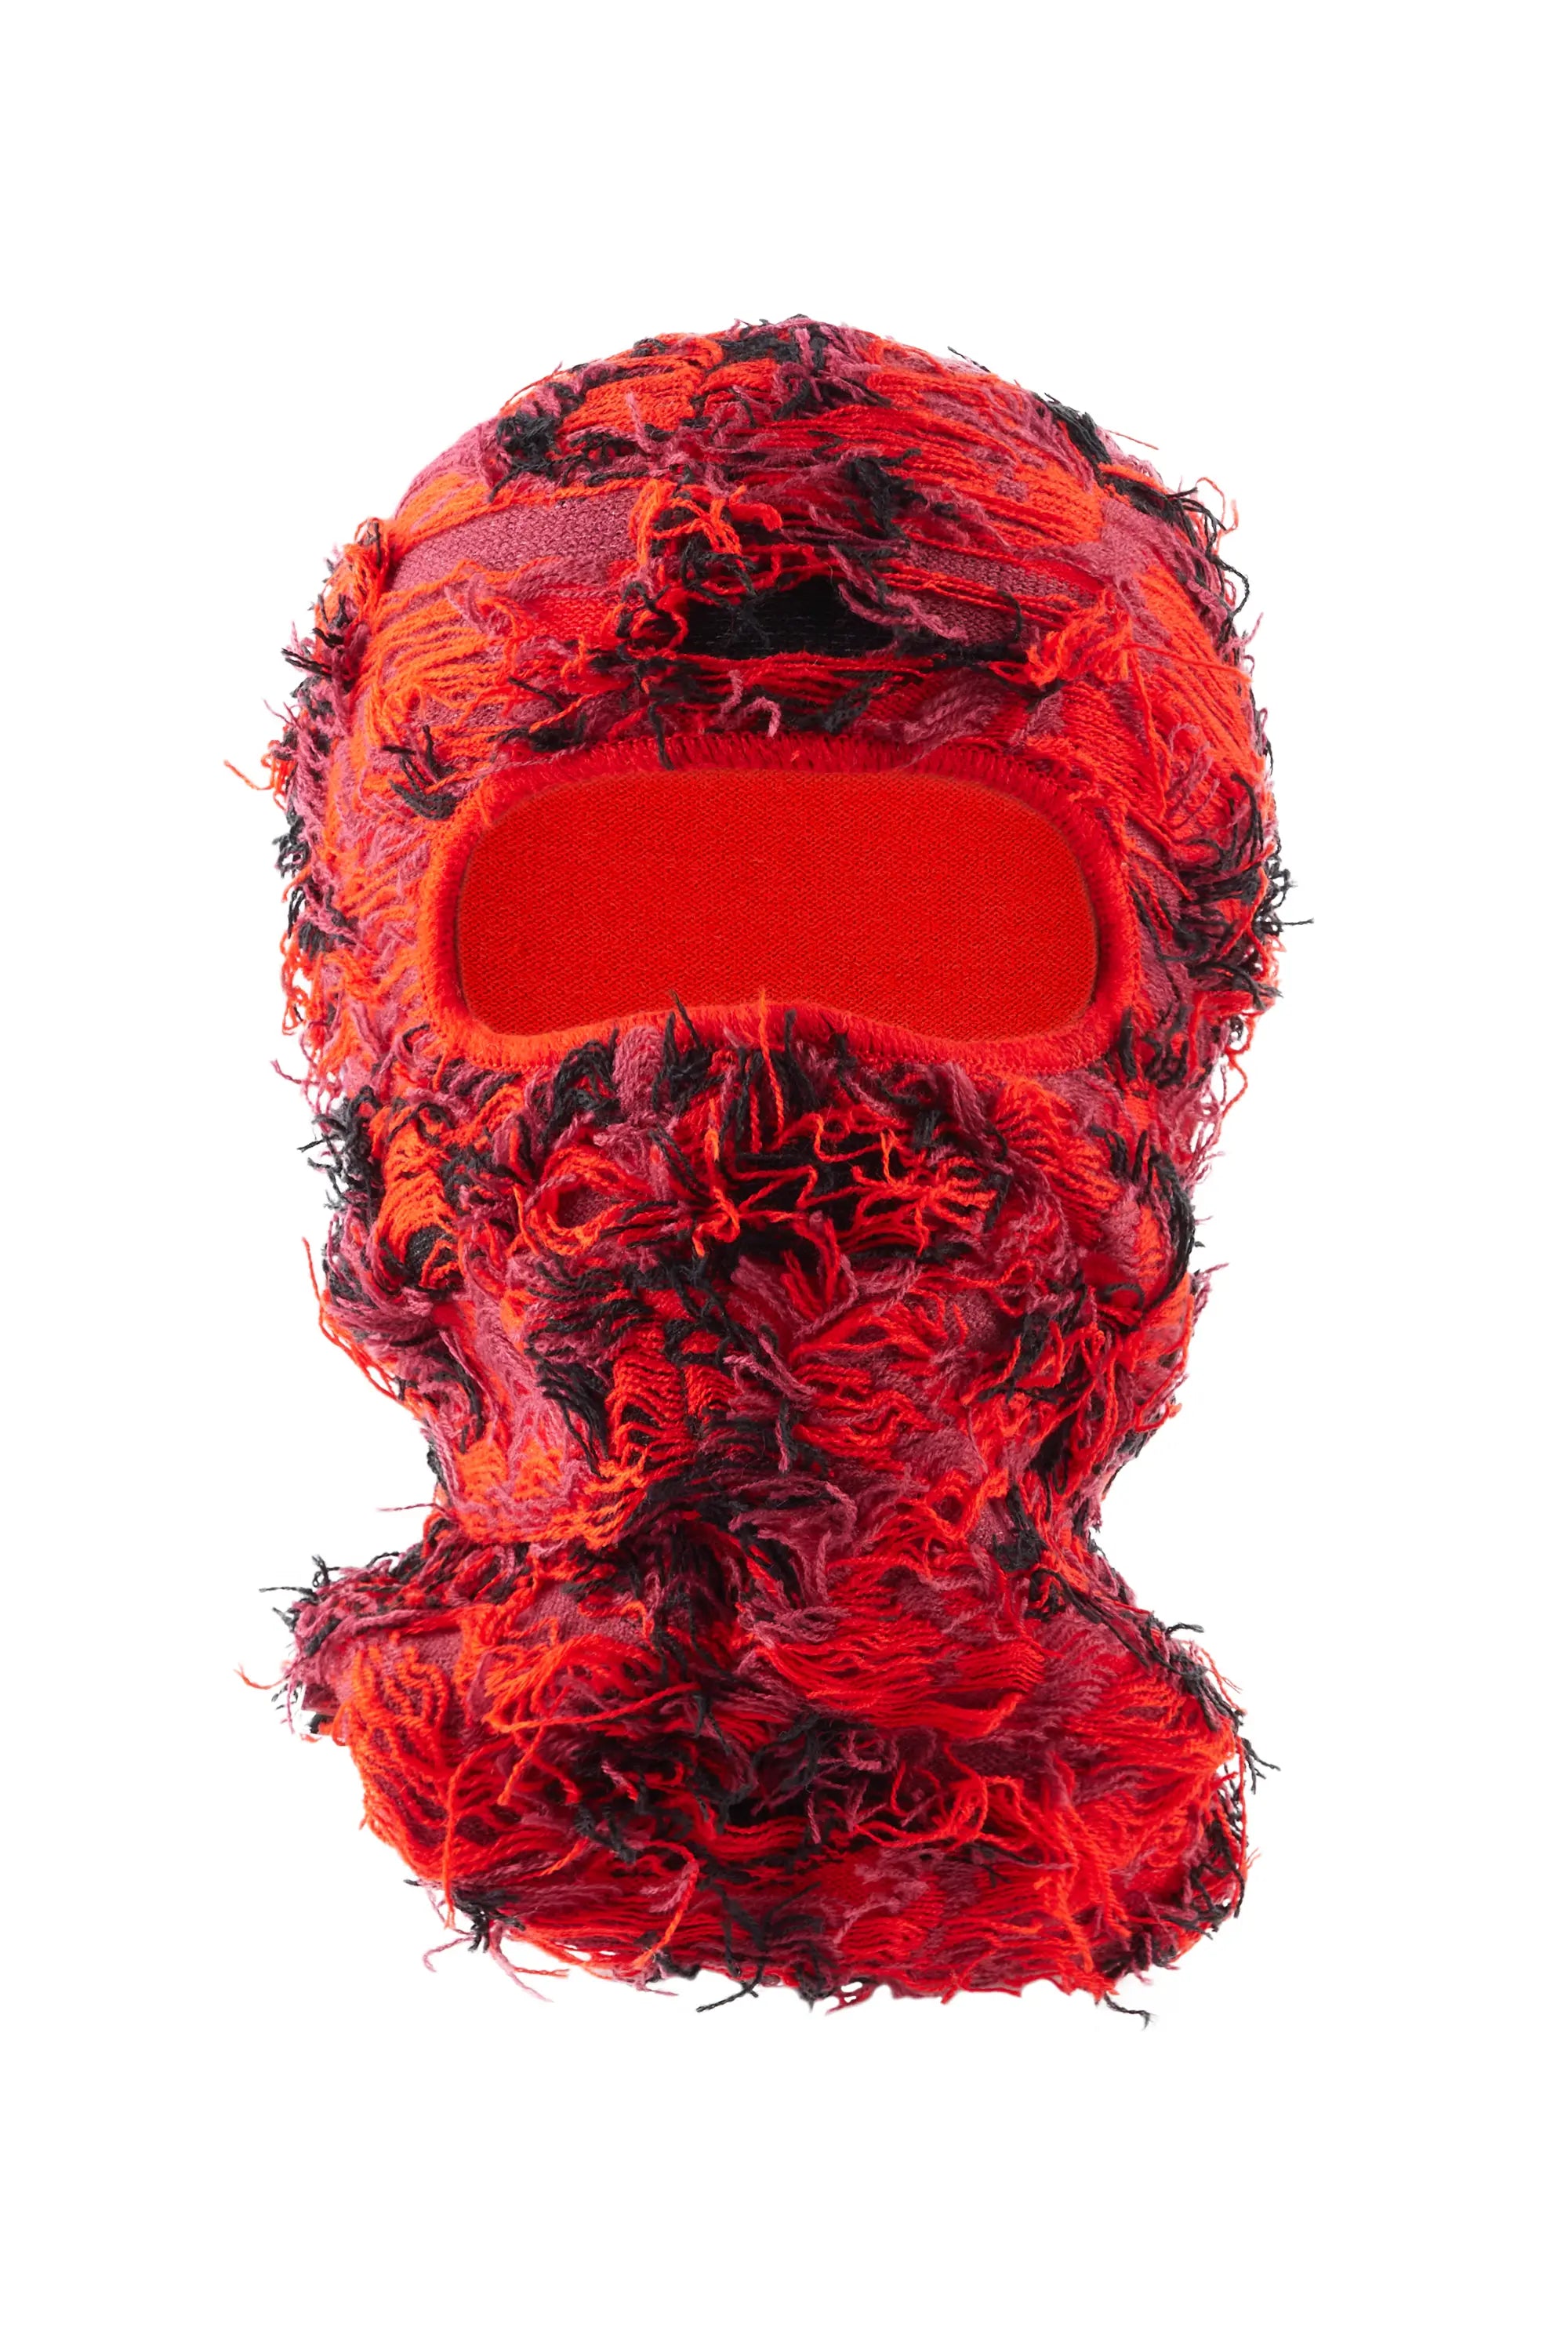 Boys Otto Red/Black Fuzzy Ski Mask